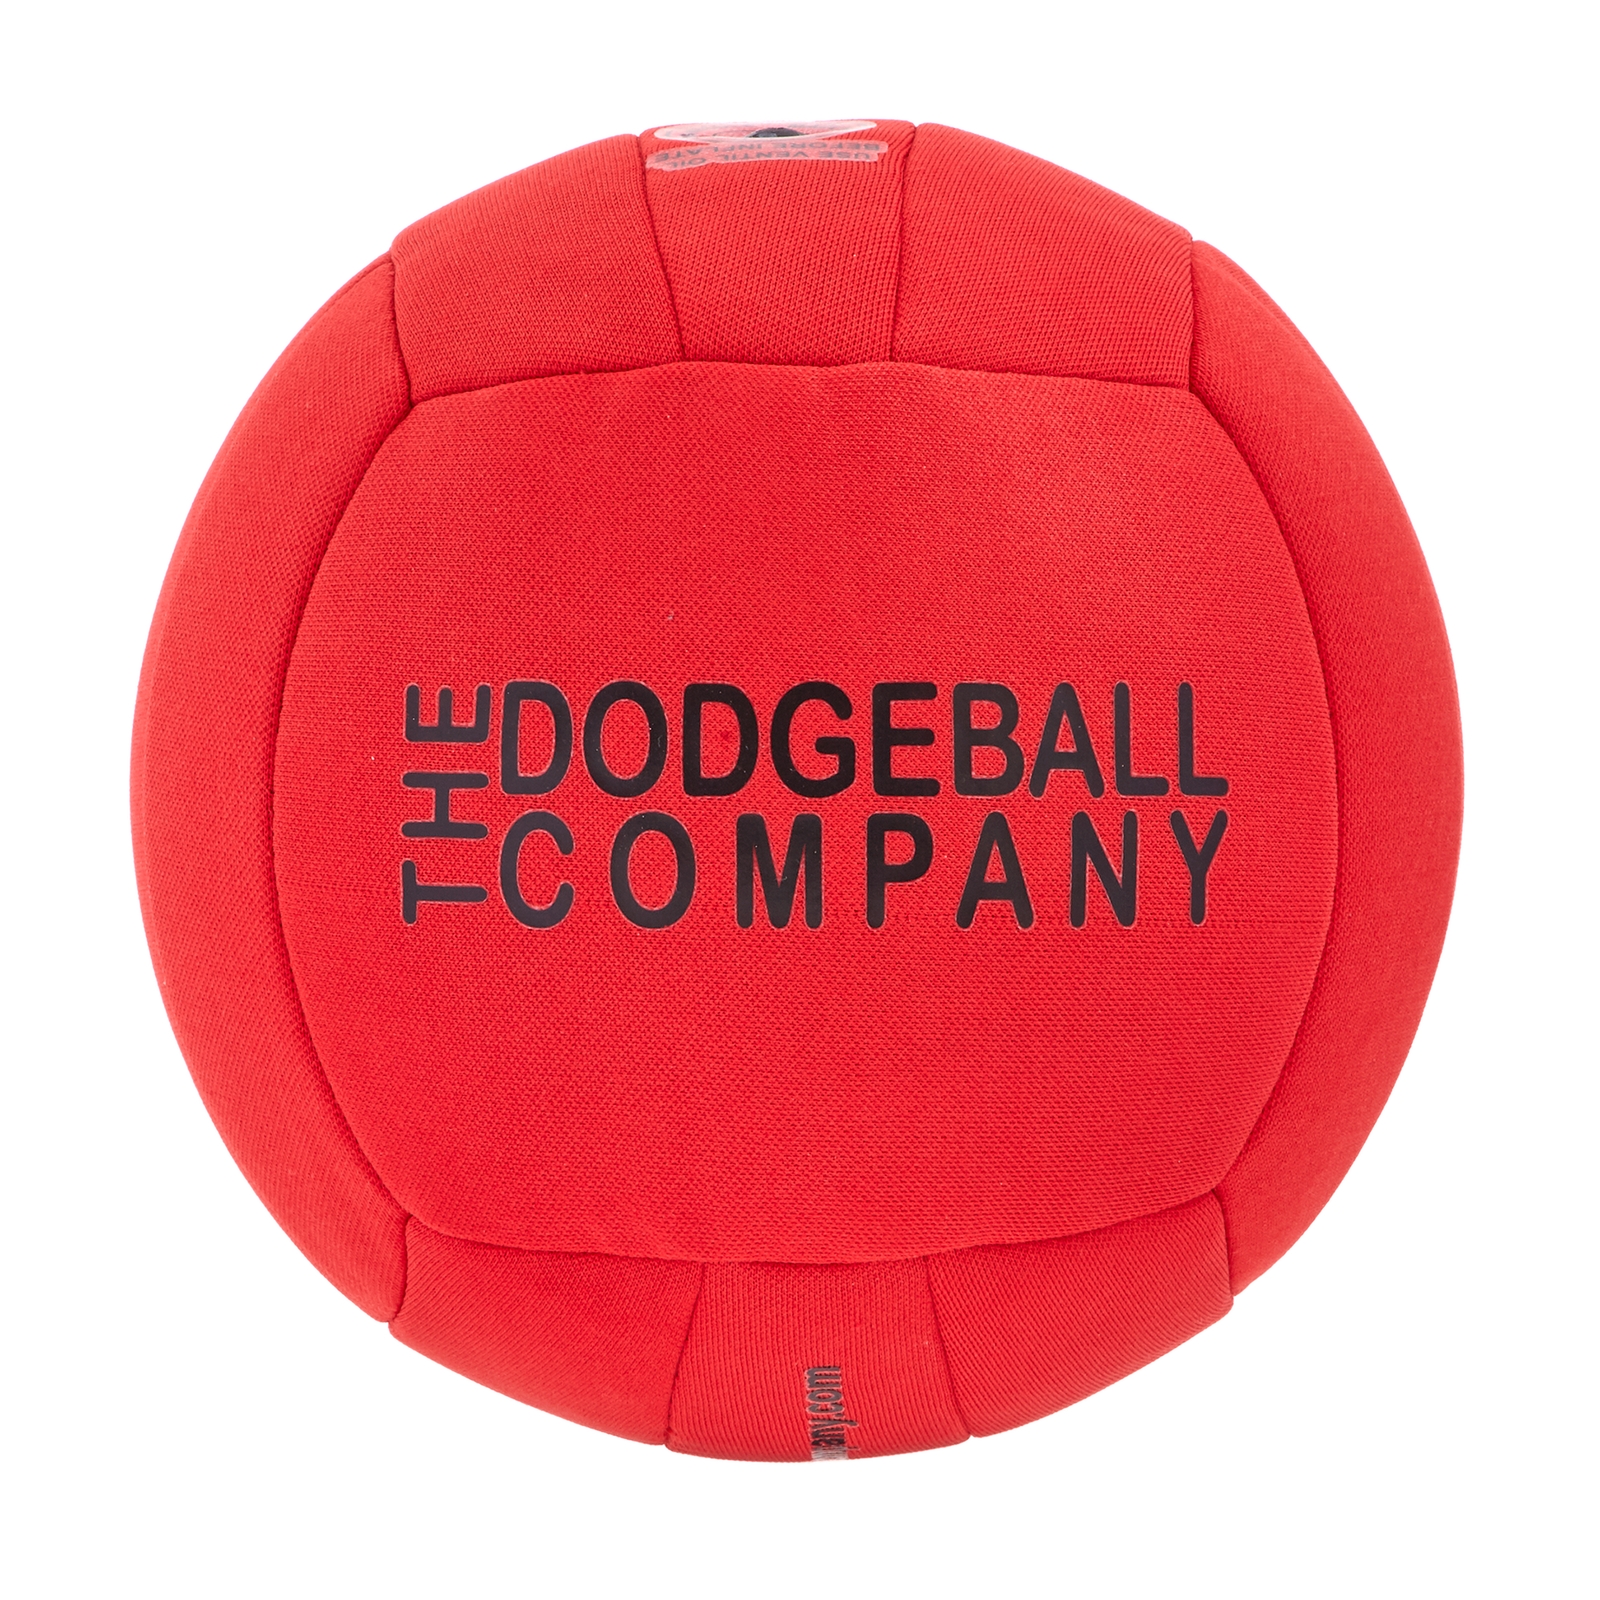 The Dodgeball Company Dodgeball - Size 3